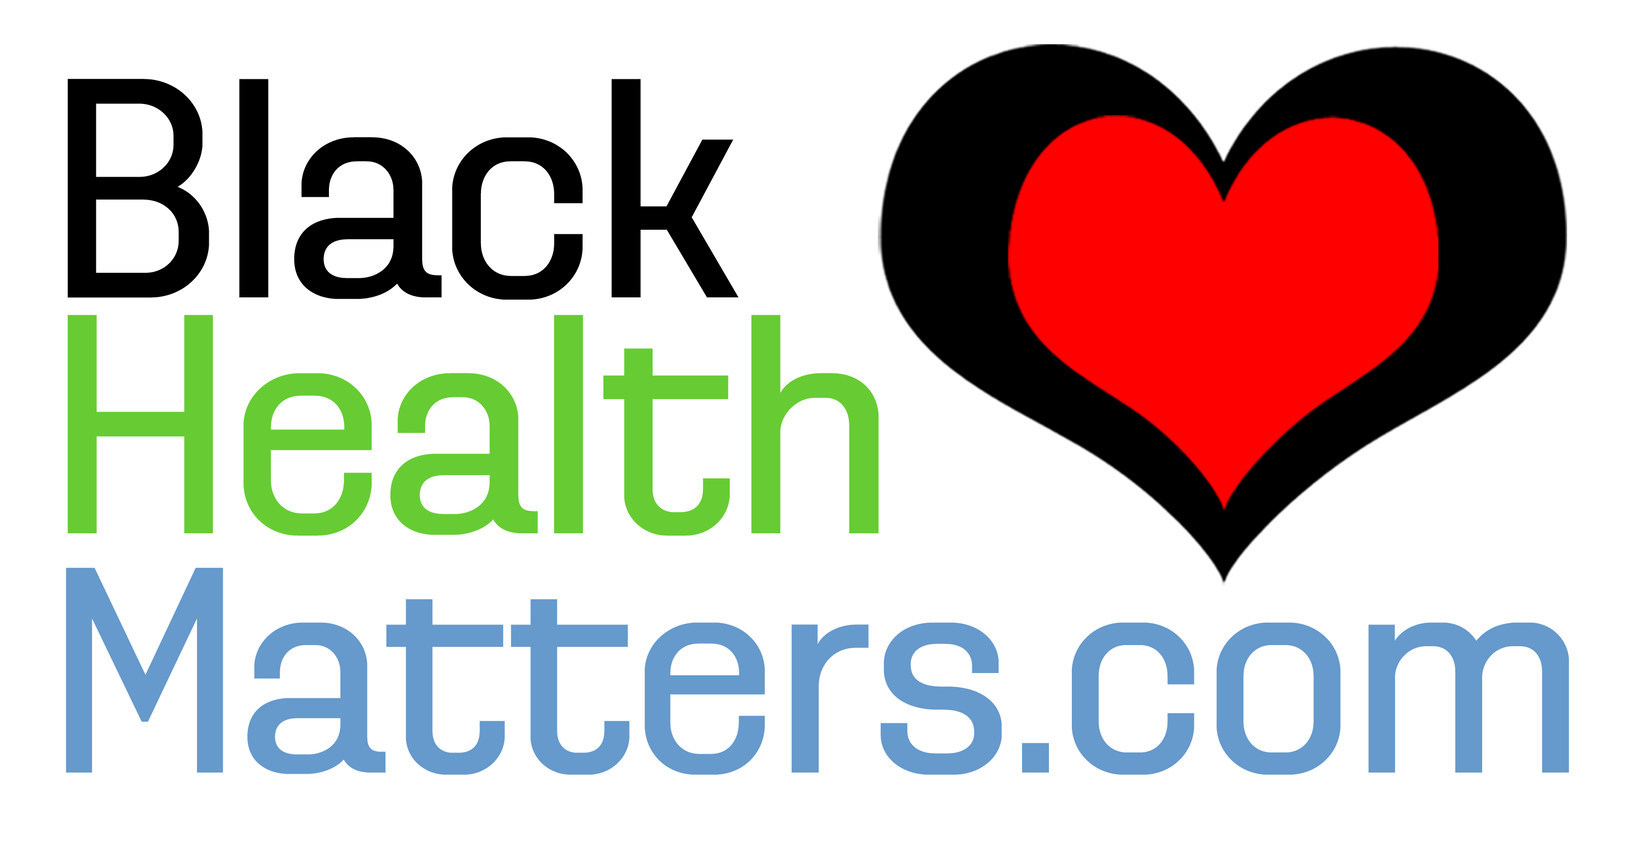 blackhealthmatters logo